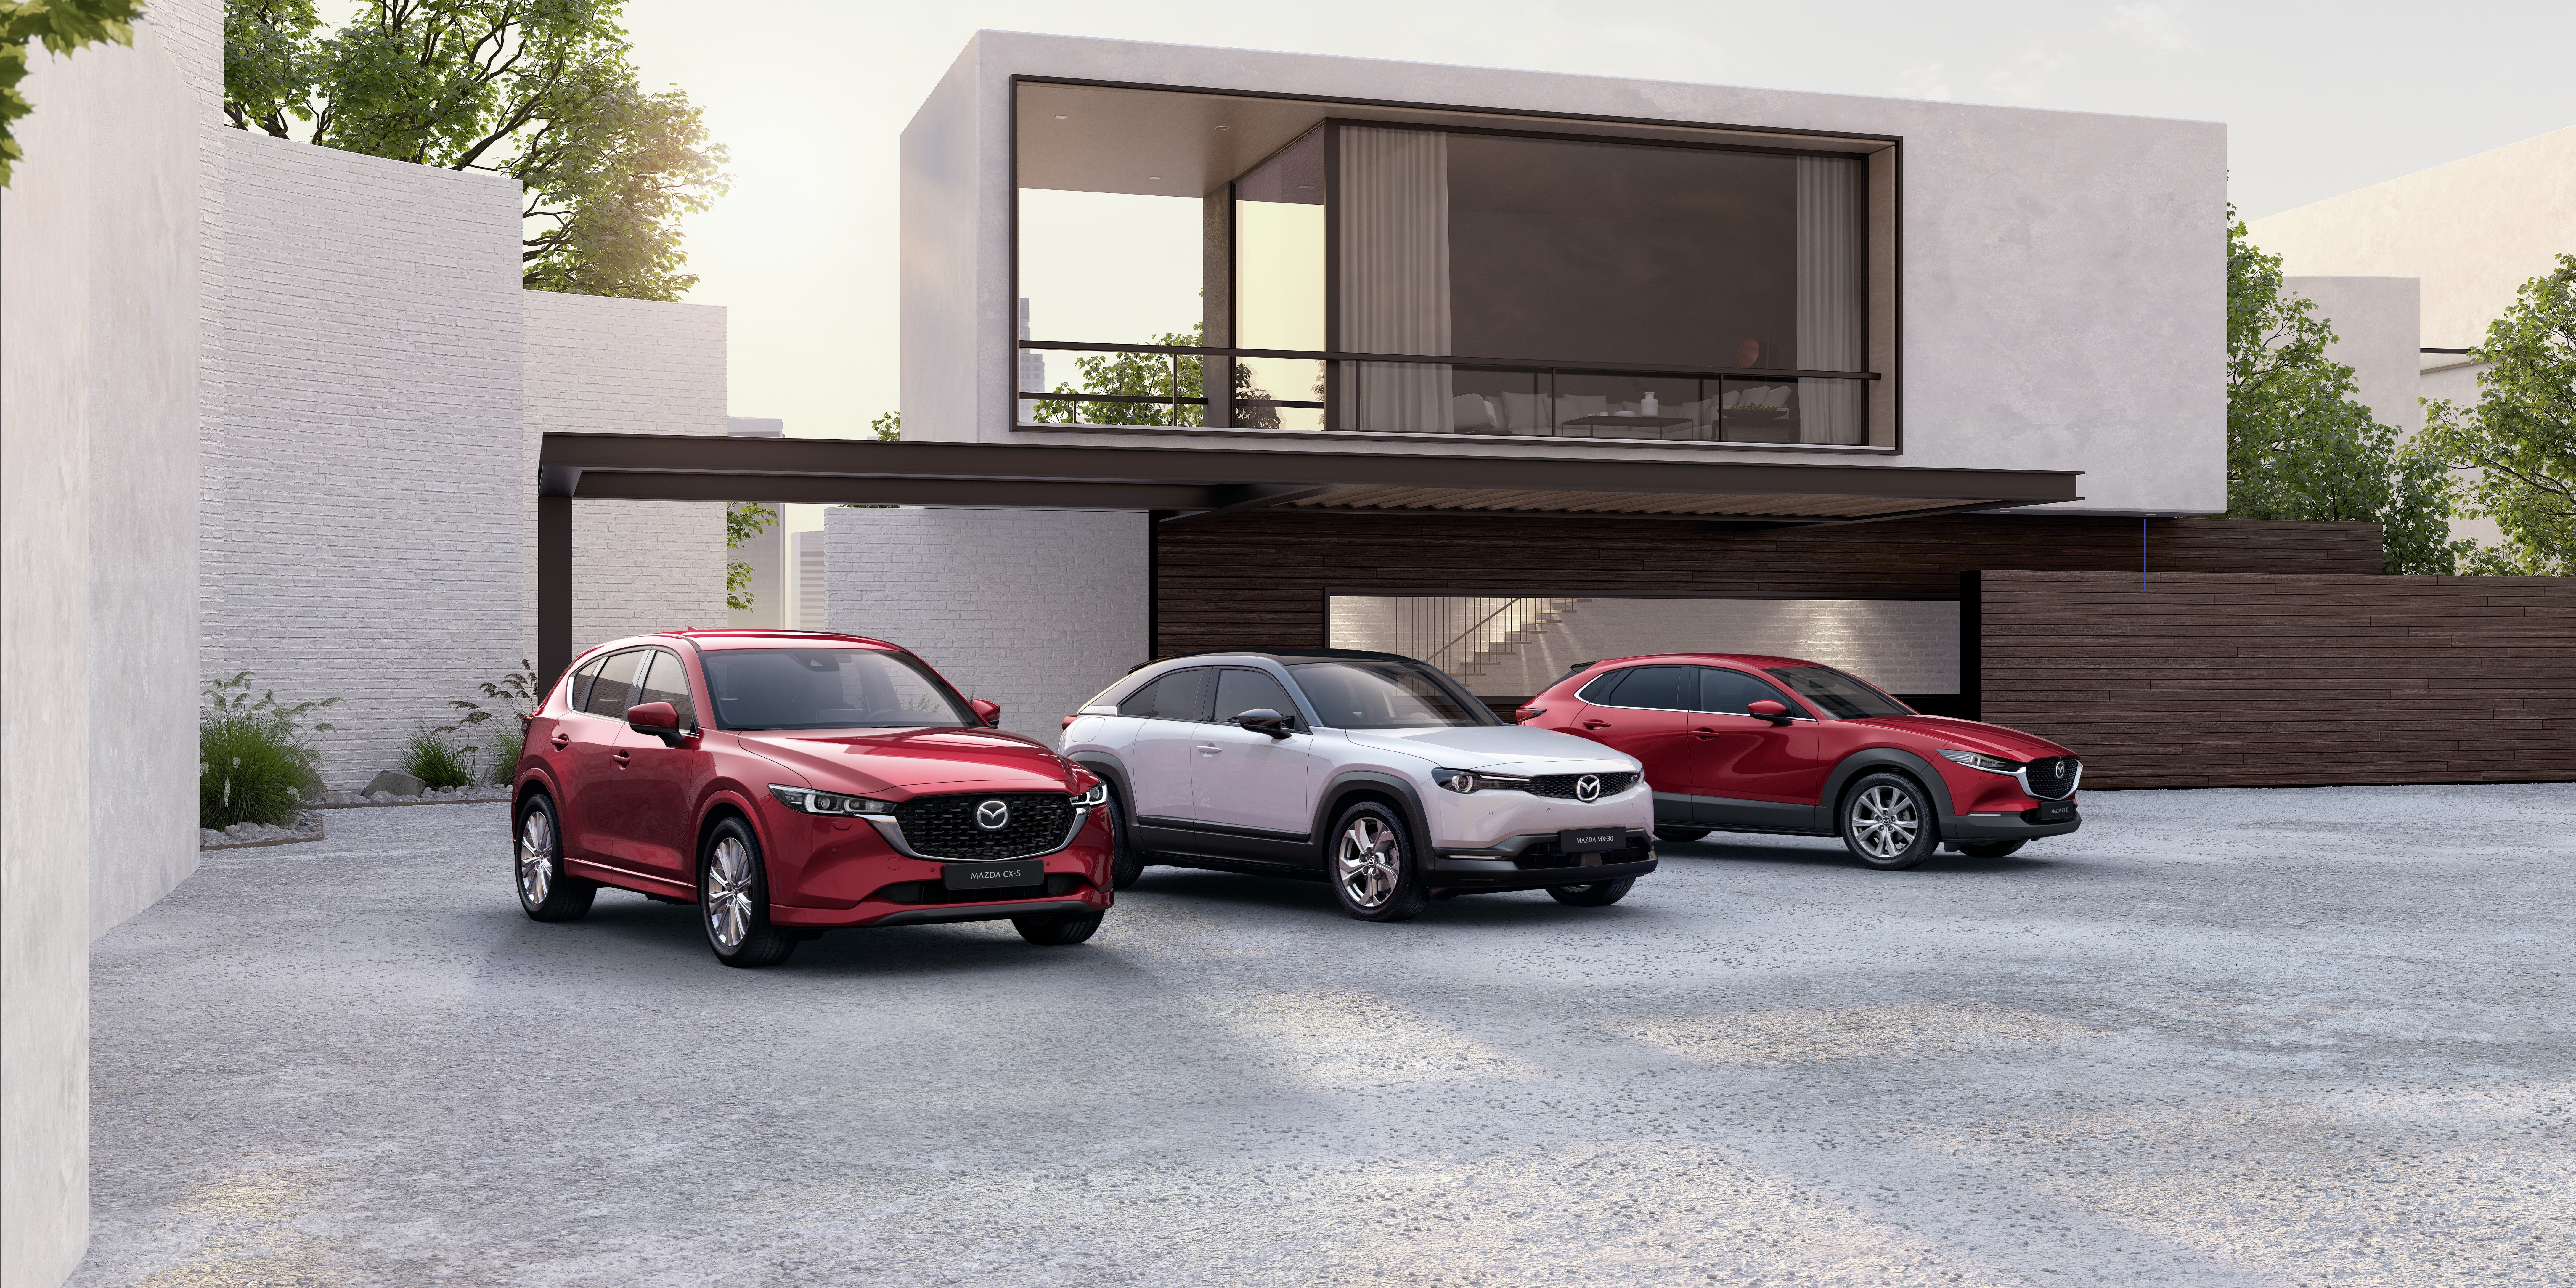 The Mazda SUV Range